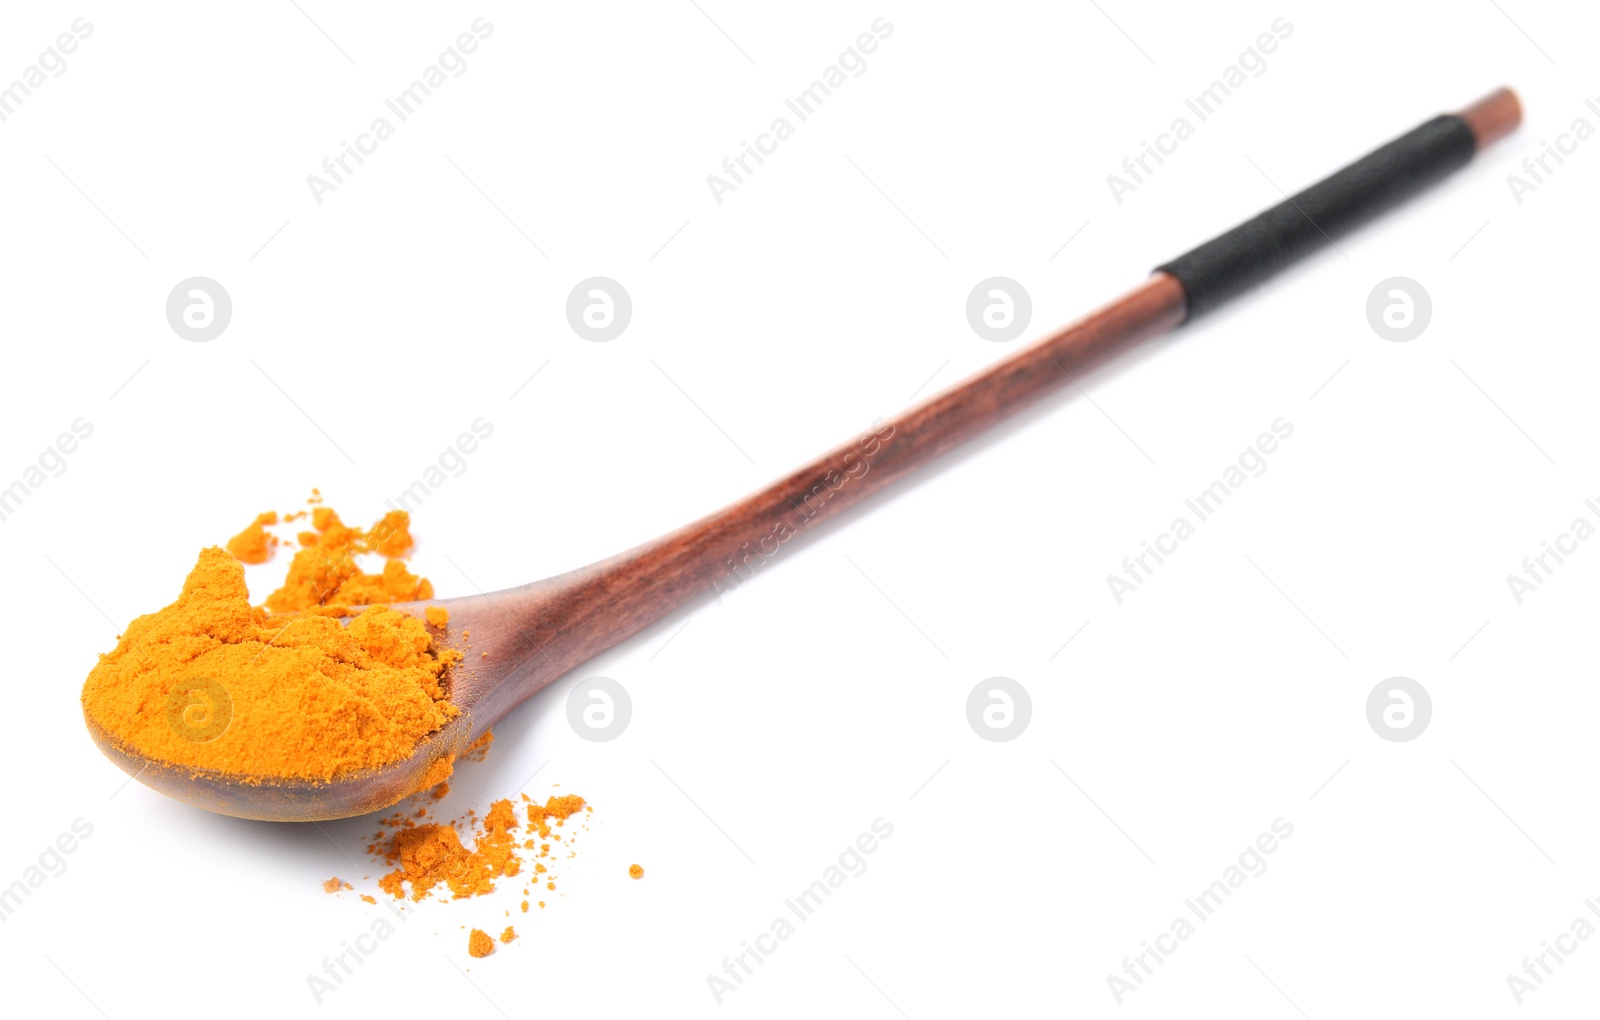 Photo of Wooden spoon with saffron powder on white background